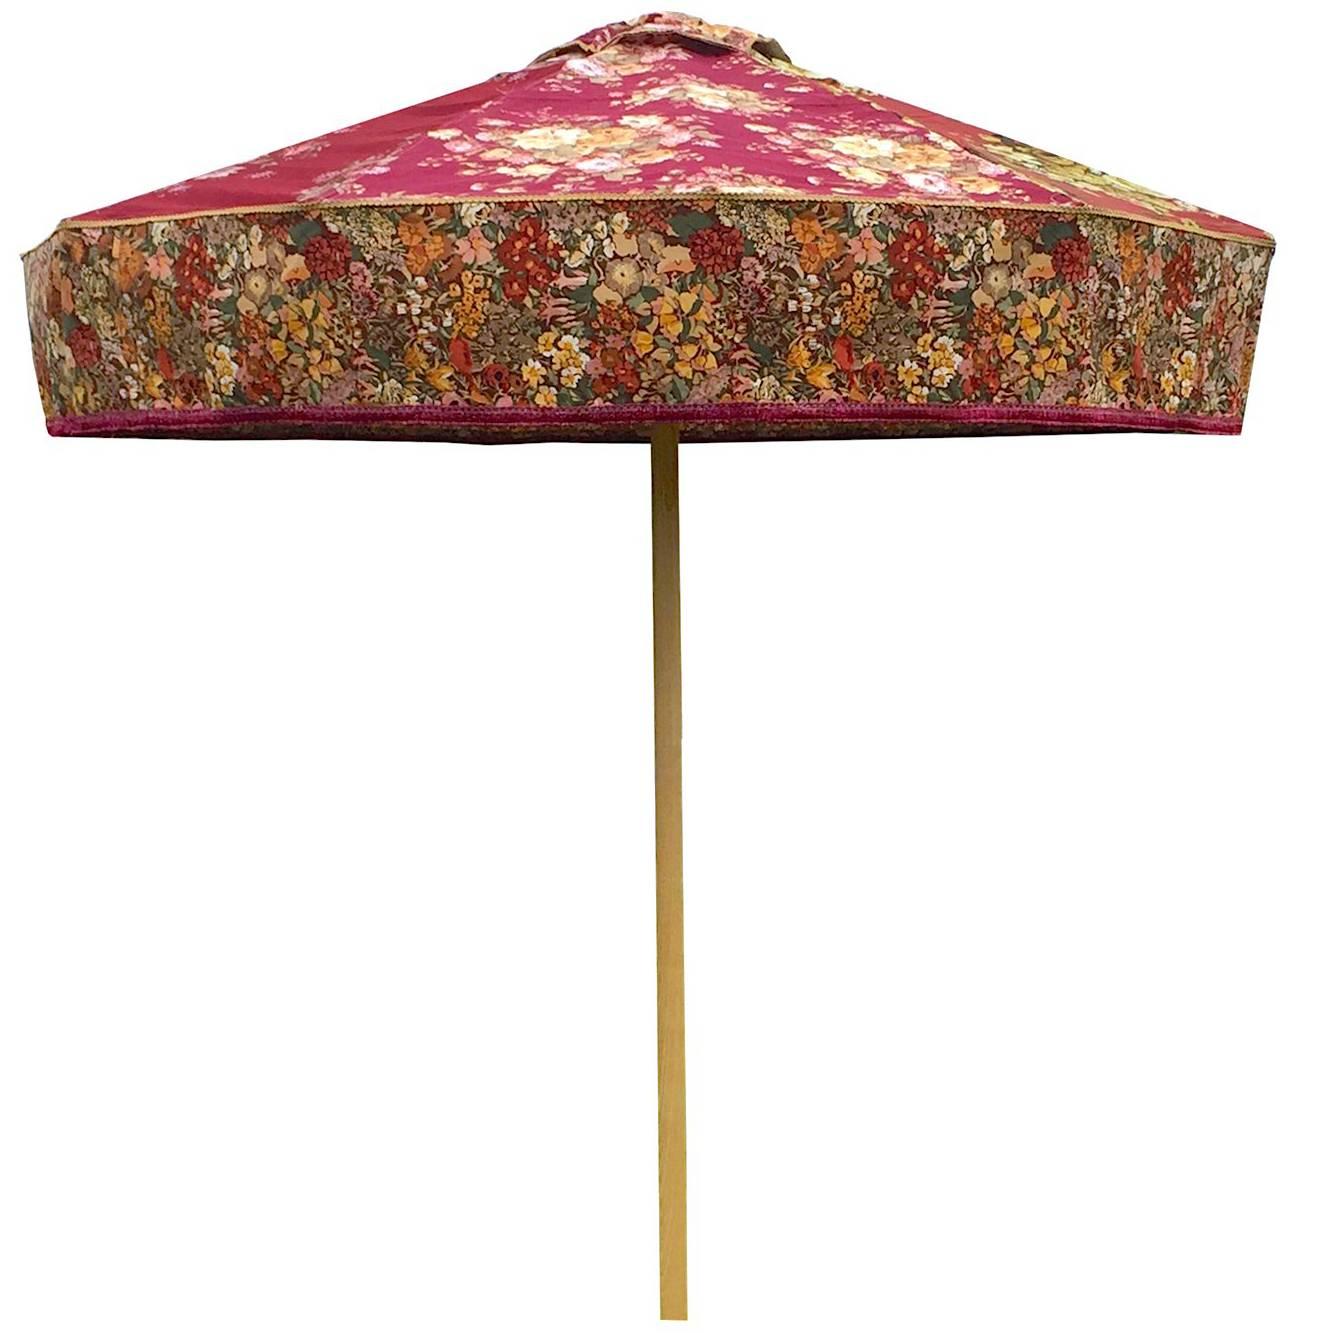 Regal Vintage Fabric Red Floral Sun Umbrella Patio Parasol 1-Off Designer Piece